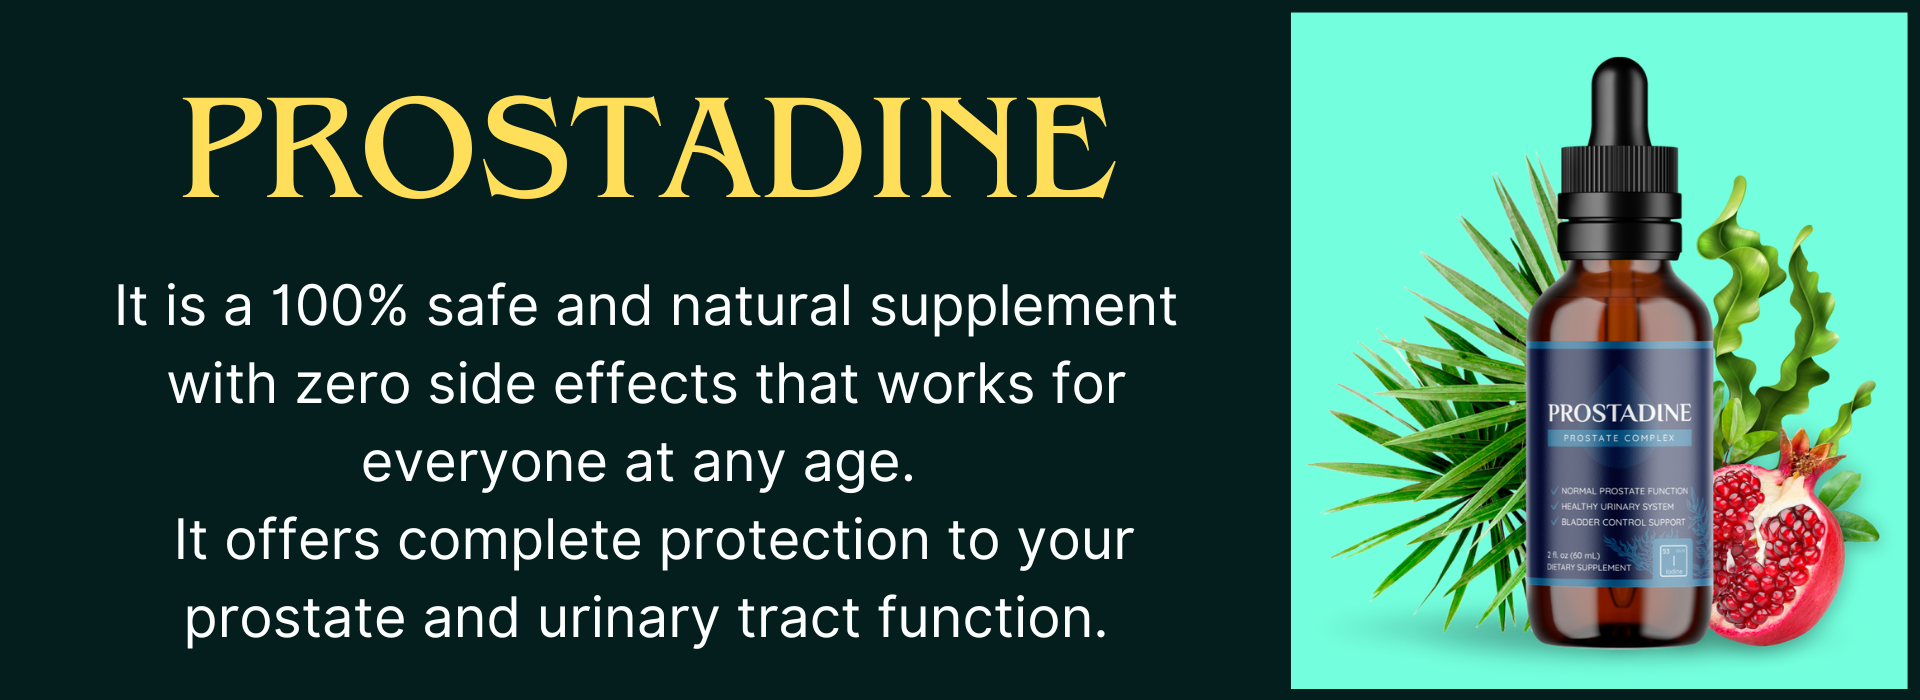 Prostadine Supplements